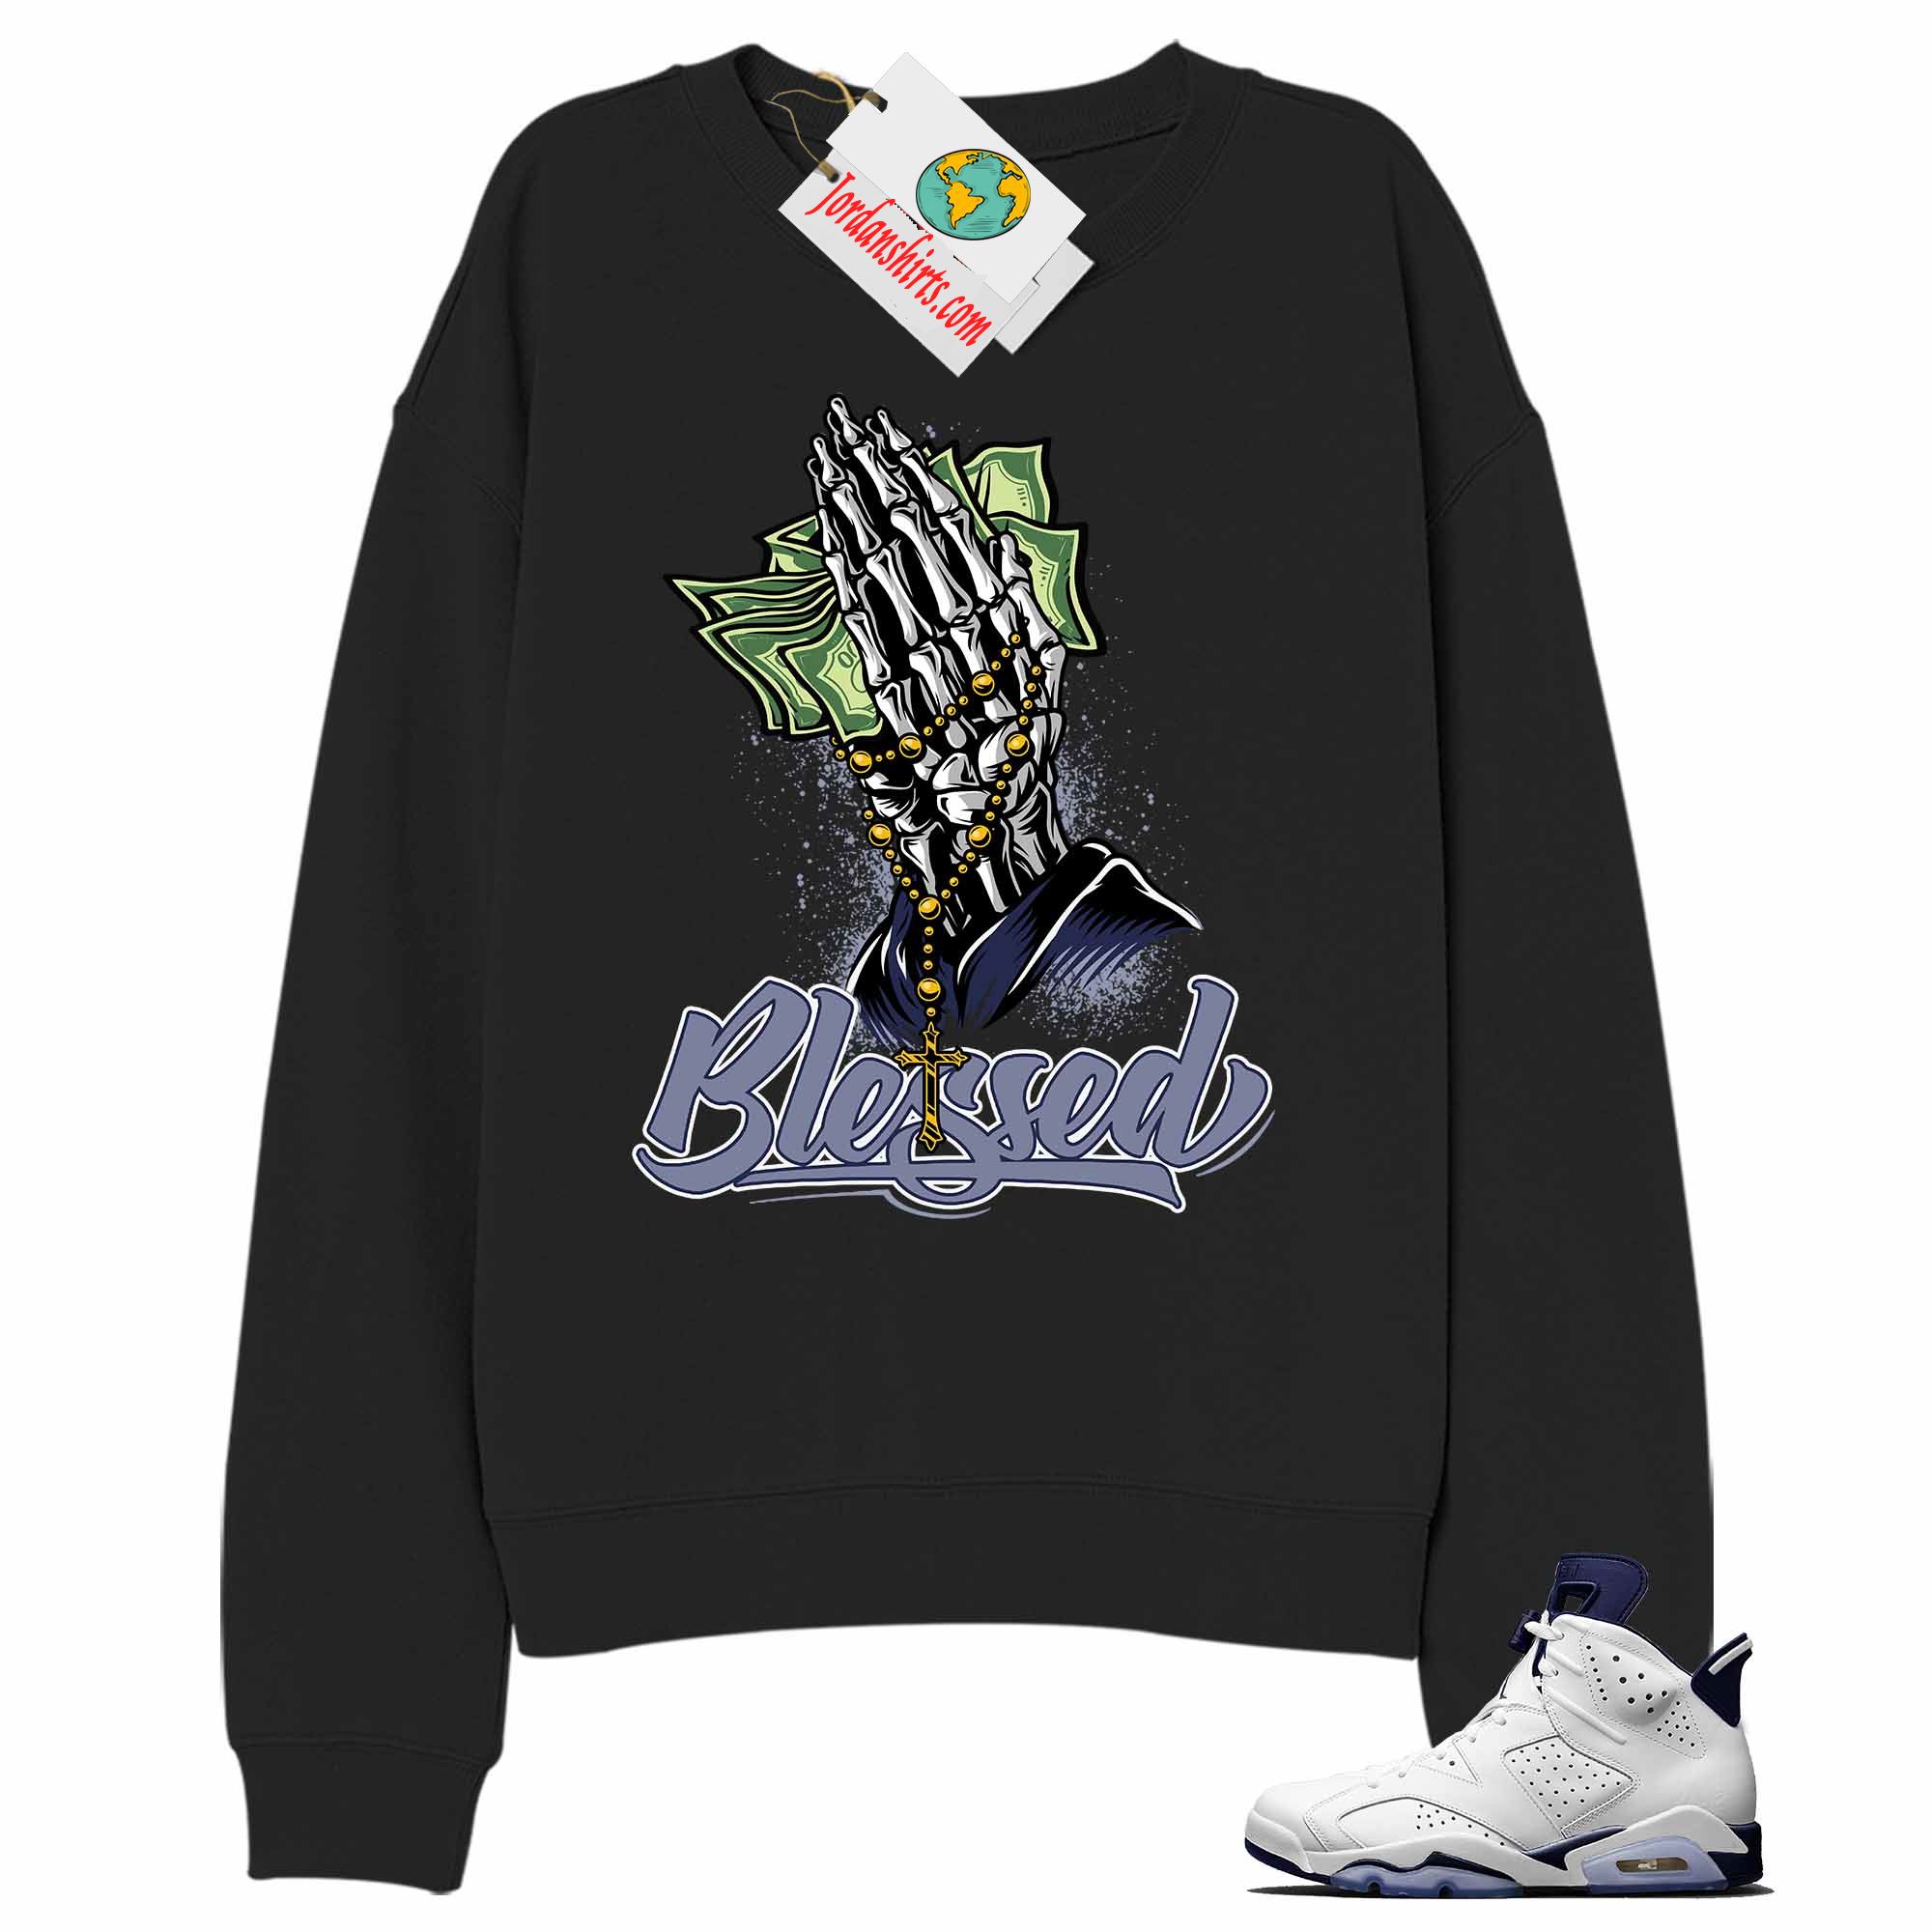 Jordan 6 Sweatshirt, Blessed Pray Hand Money Black Sweatshirt Air Jordan 6 Midnight Navy 6s Full Size Up To 5xl